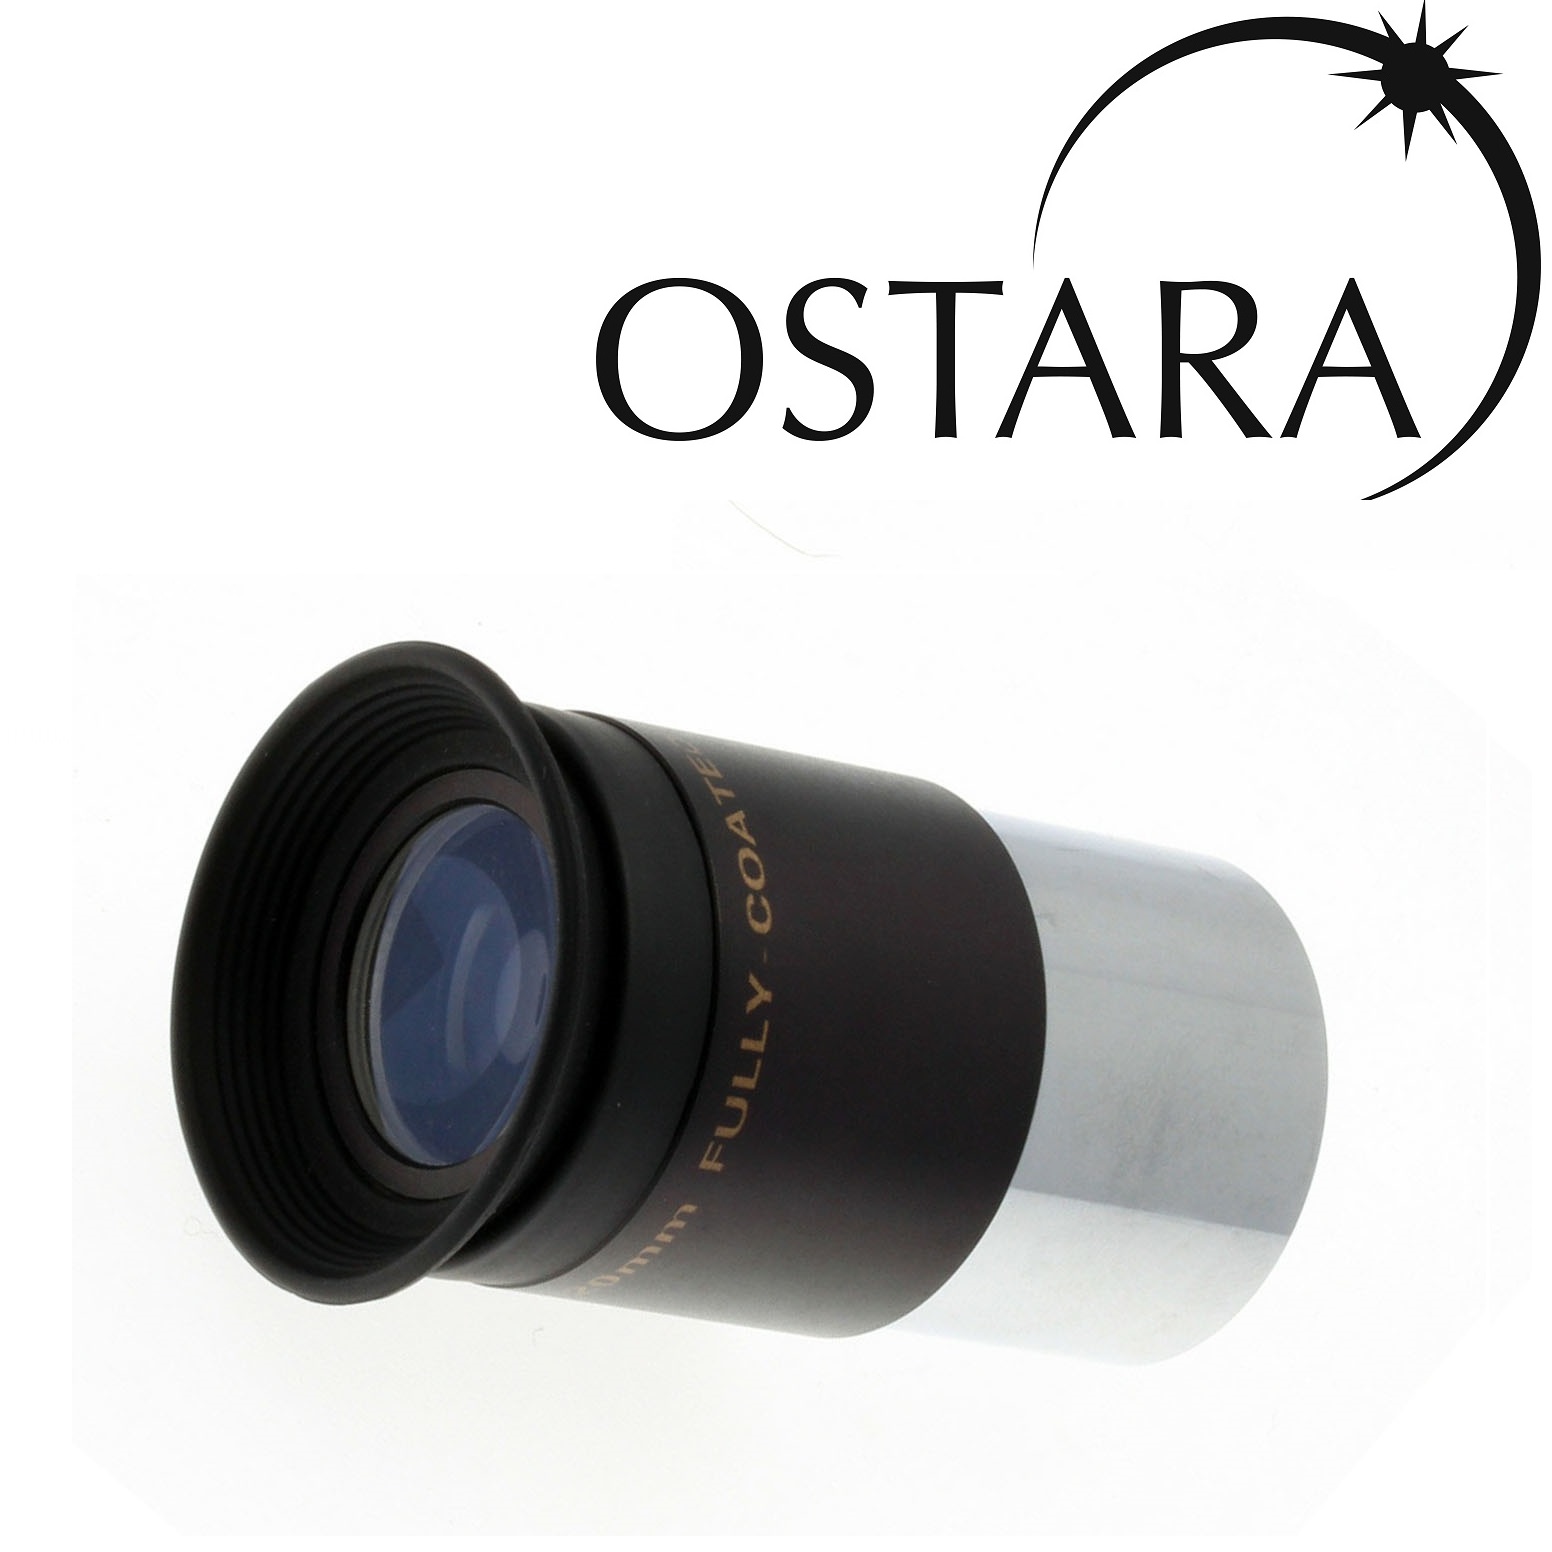 Ostara HR 20mm Plossl Eyepieces  1.25